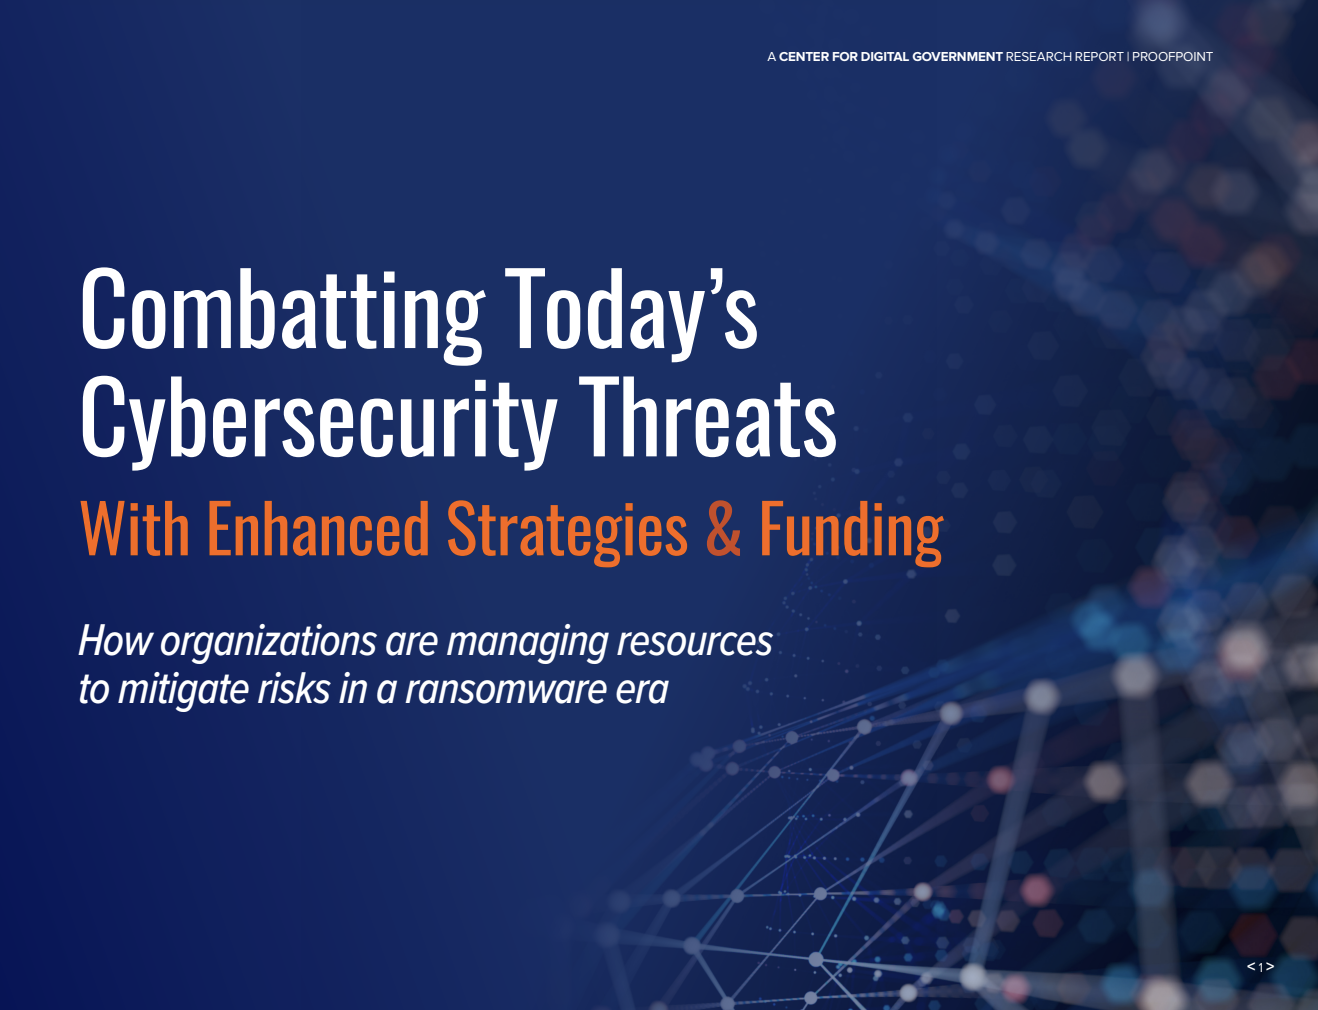 Combatting cybersecurity threats strategies funding report